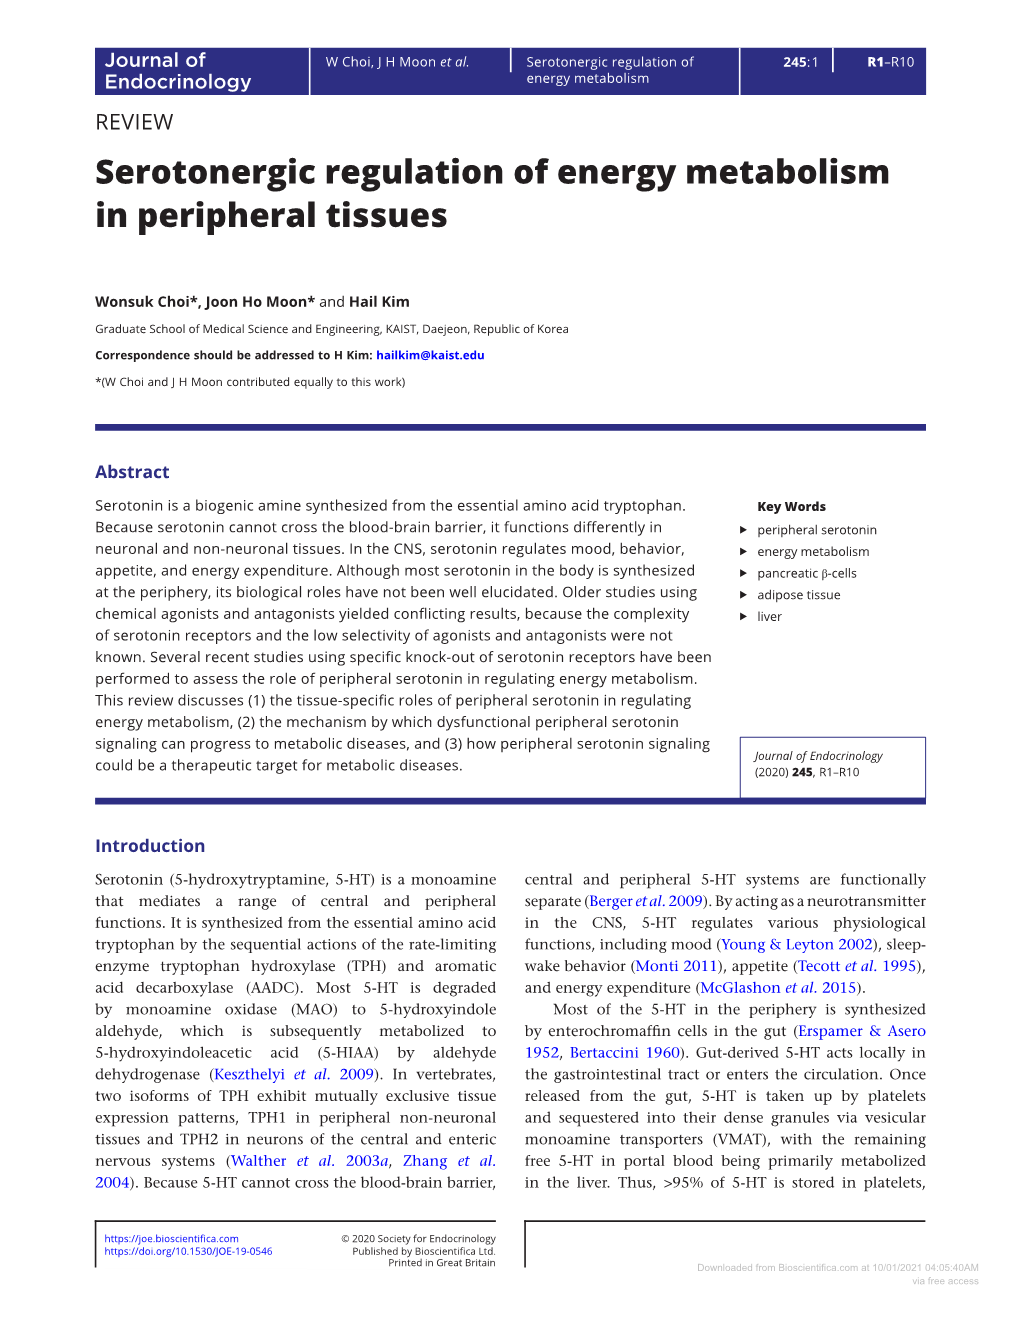 Serotonergic Regulation of Energy Metabolism in Peripheral Tissues